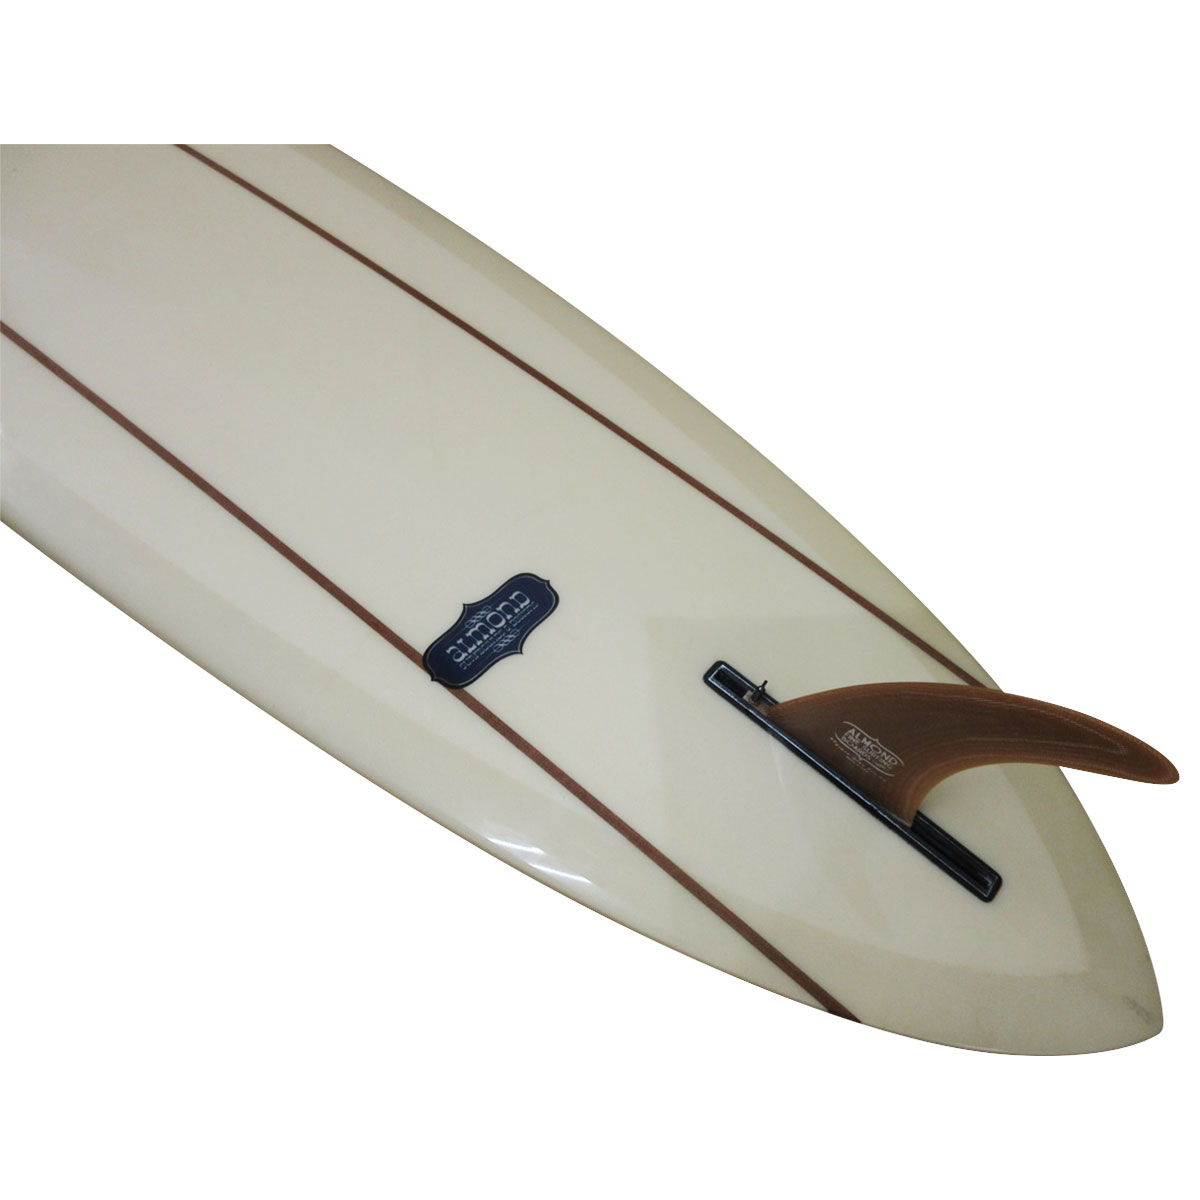 ALMOND SURFBOARDS / The JOY 7`6